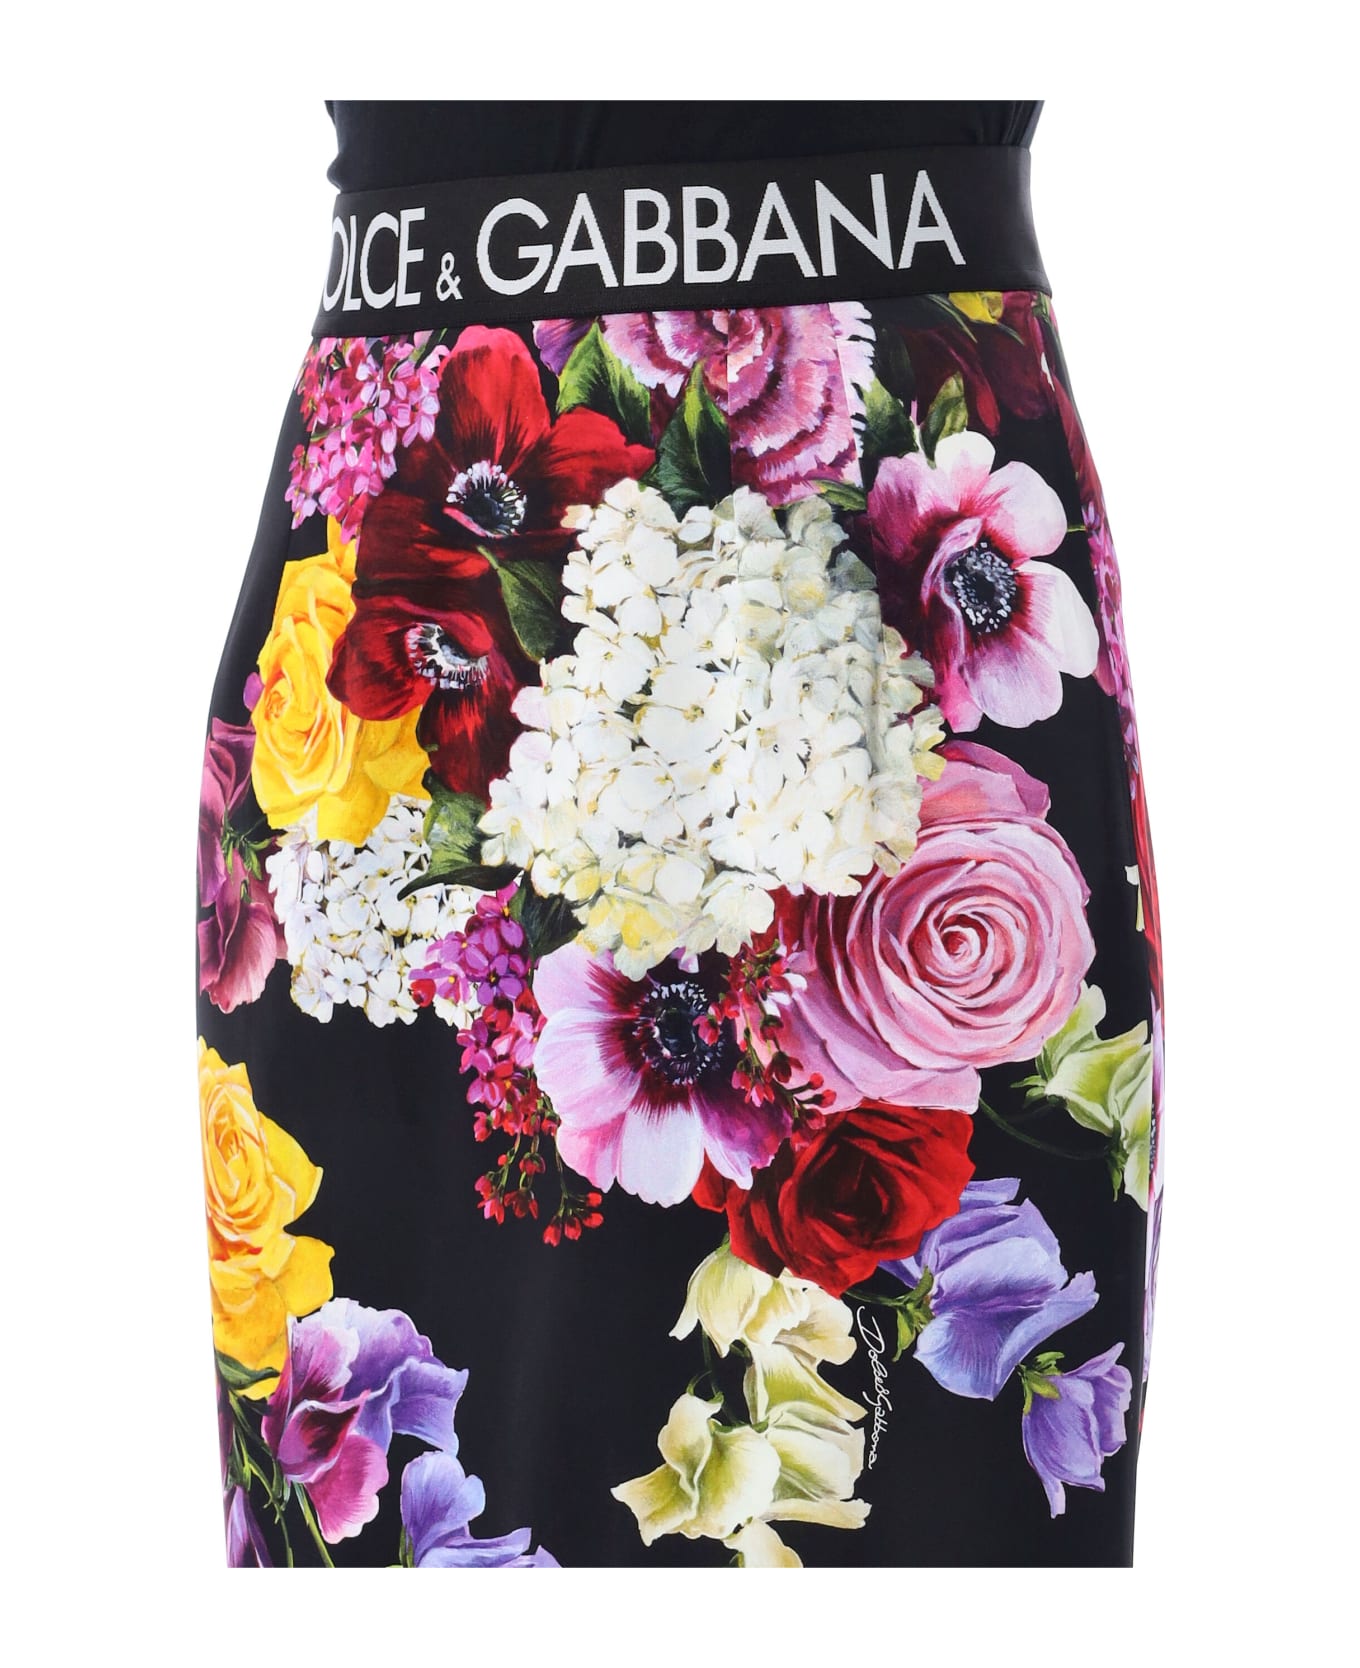 Dolce & Gabbana Hydrangea And Floral Print Midi Skirt - ORTENSIE/FIORI F.NER